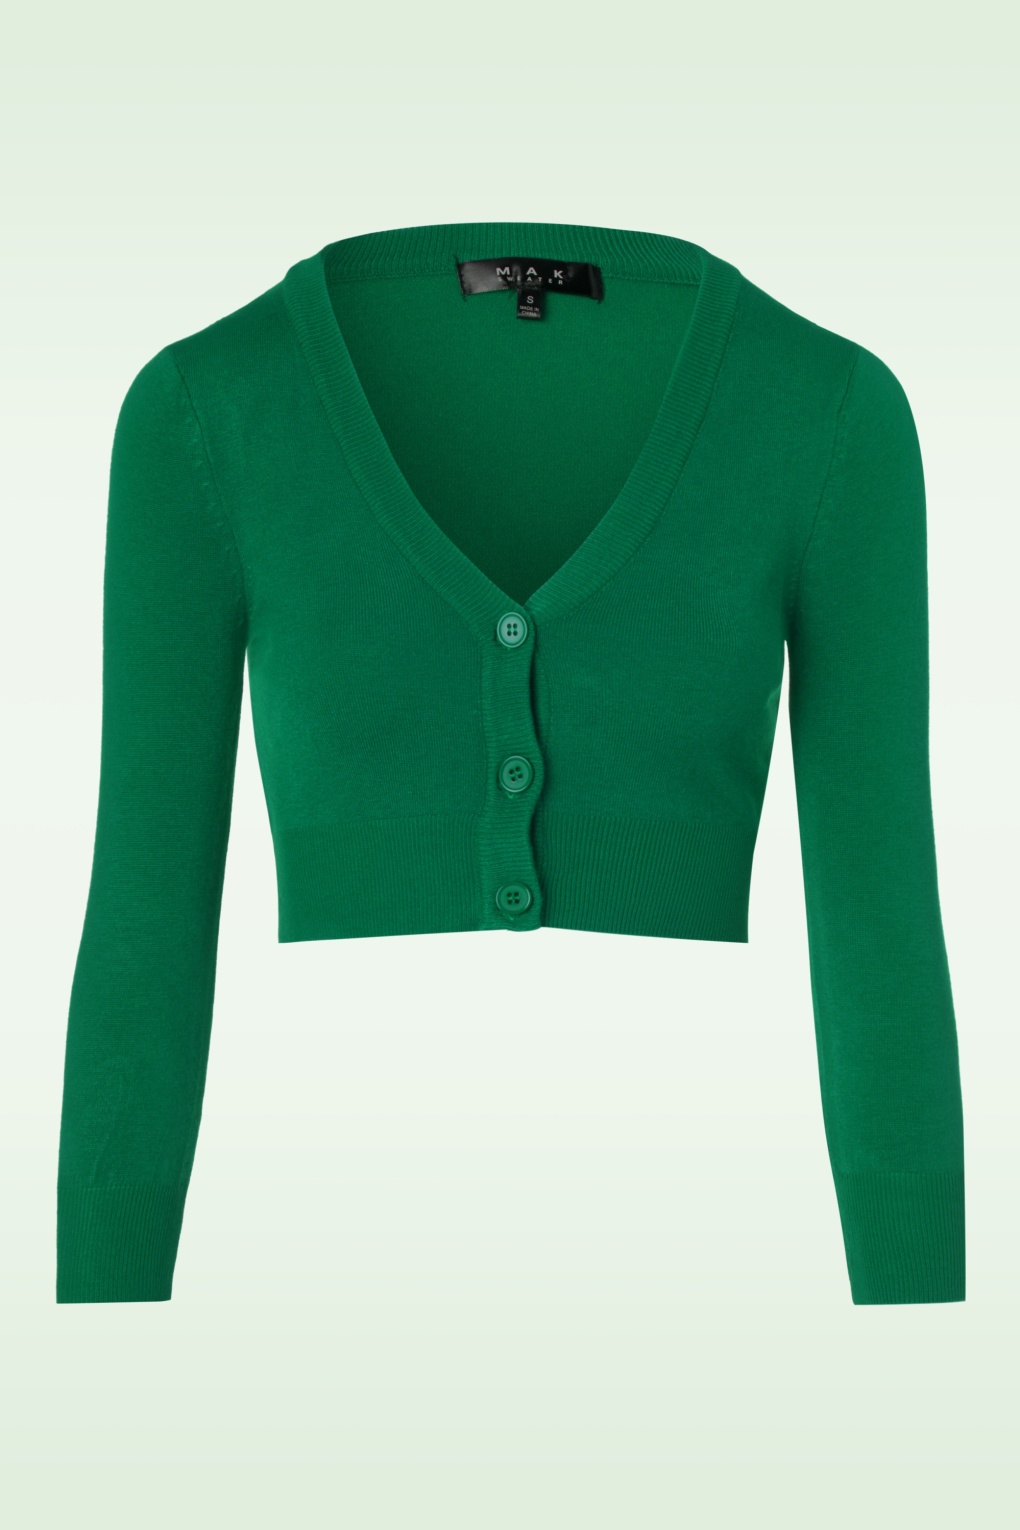 shela cropped cardigan années 50 en vert émeraude